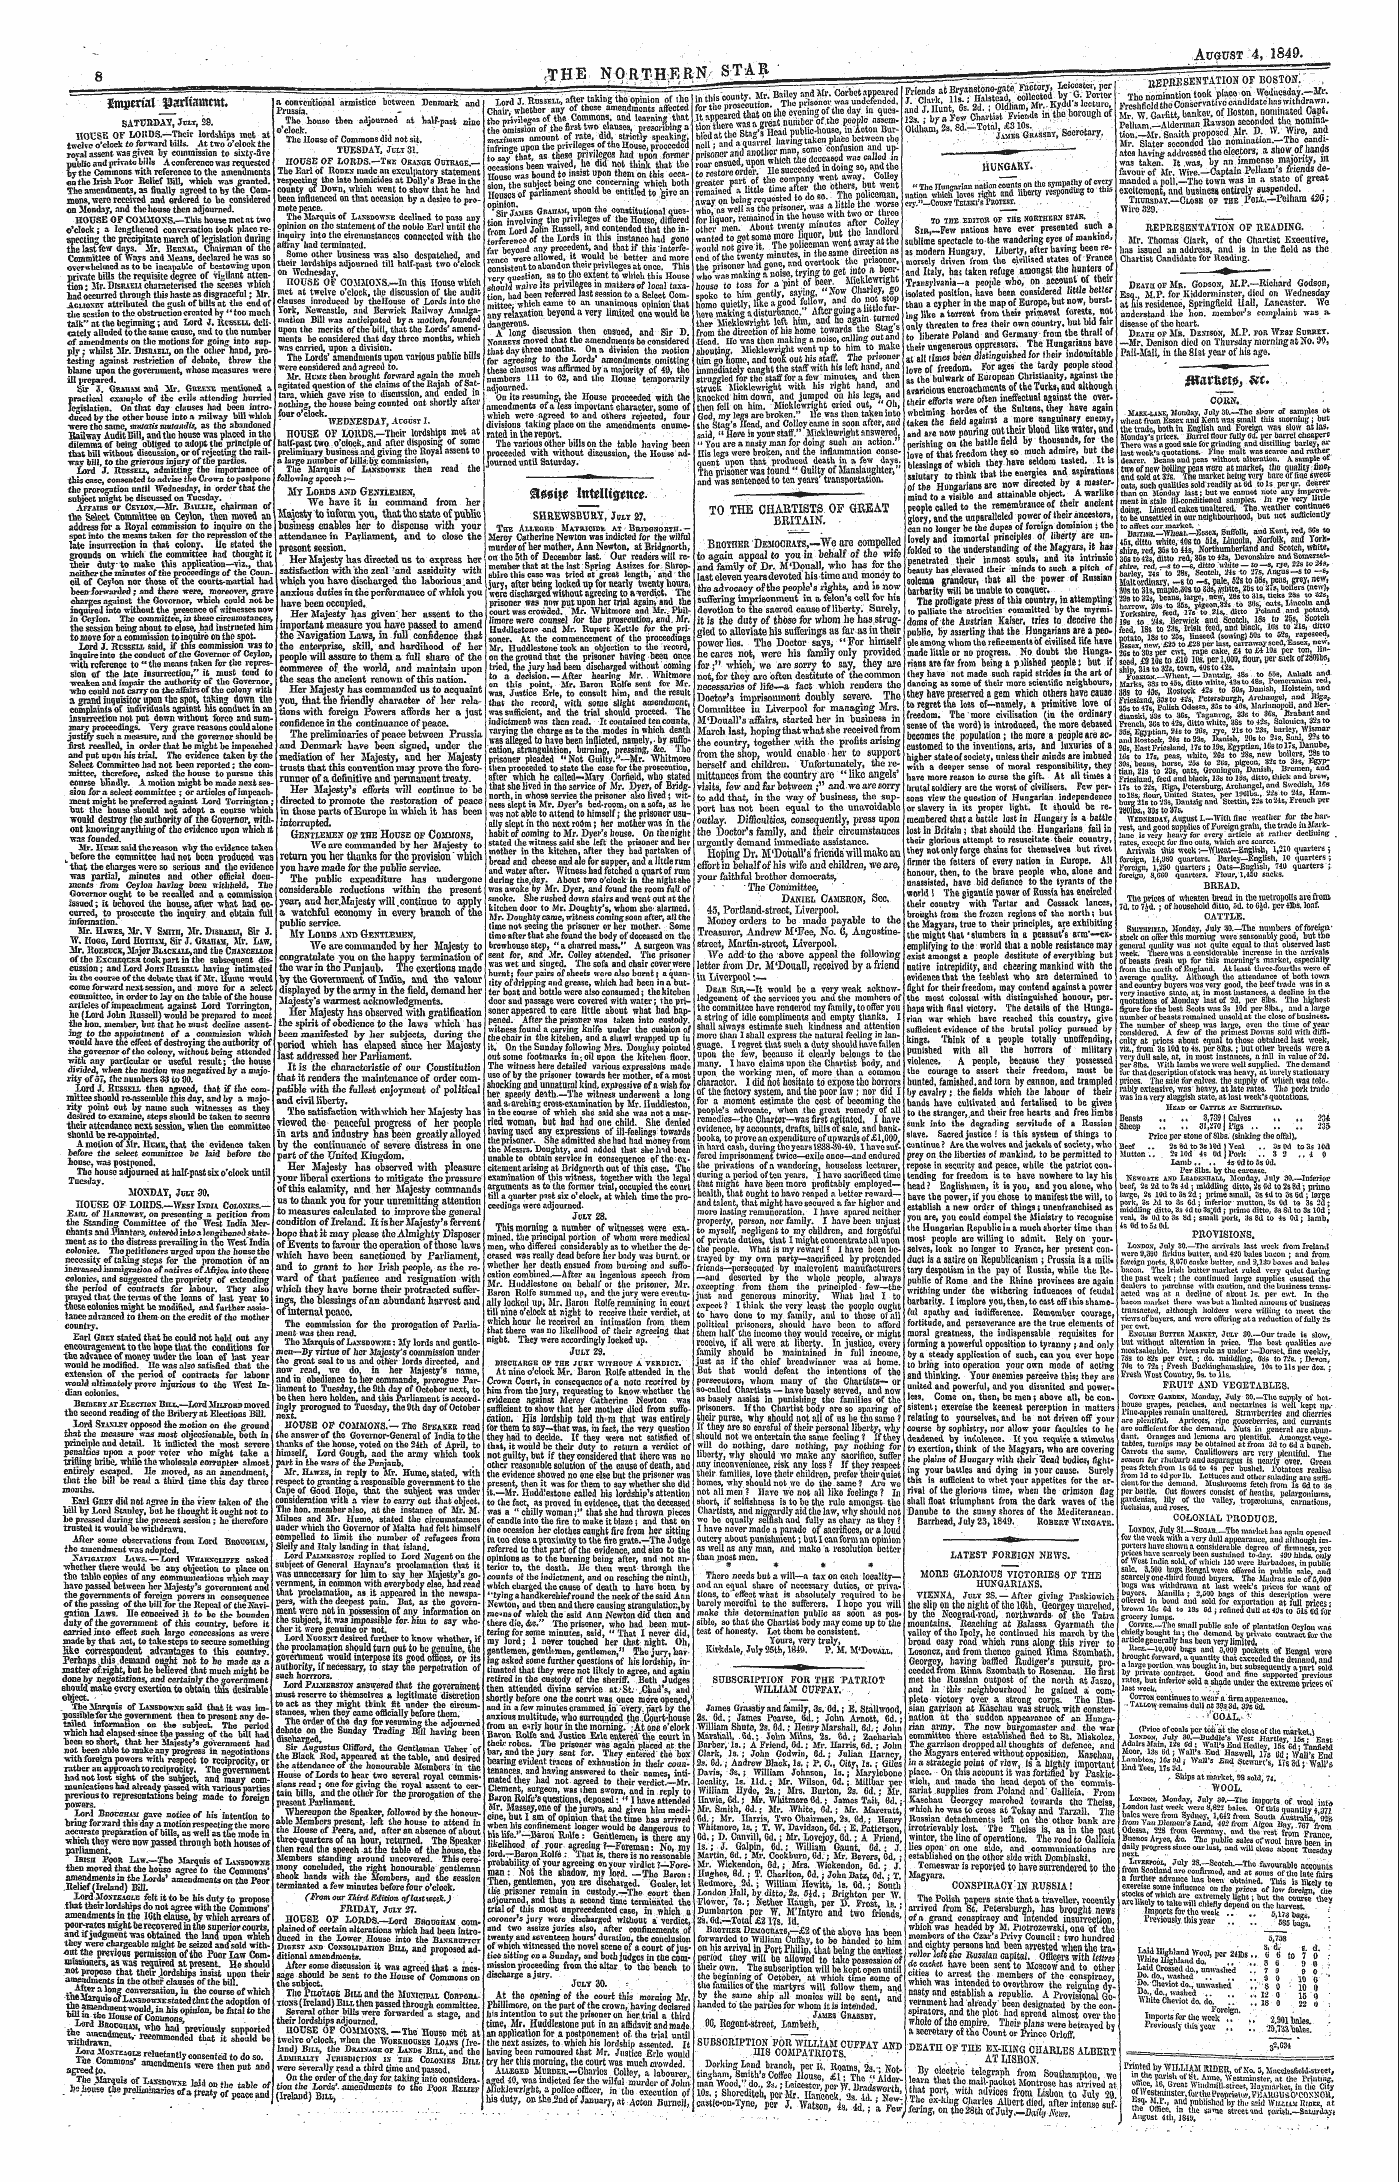 Northern Star (1837-1852): jS F Y, 2nd edition - Death Of Mr. Godson, M.P.—Richard Godson...